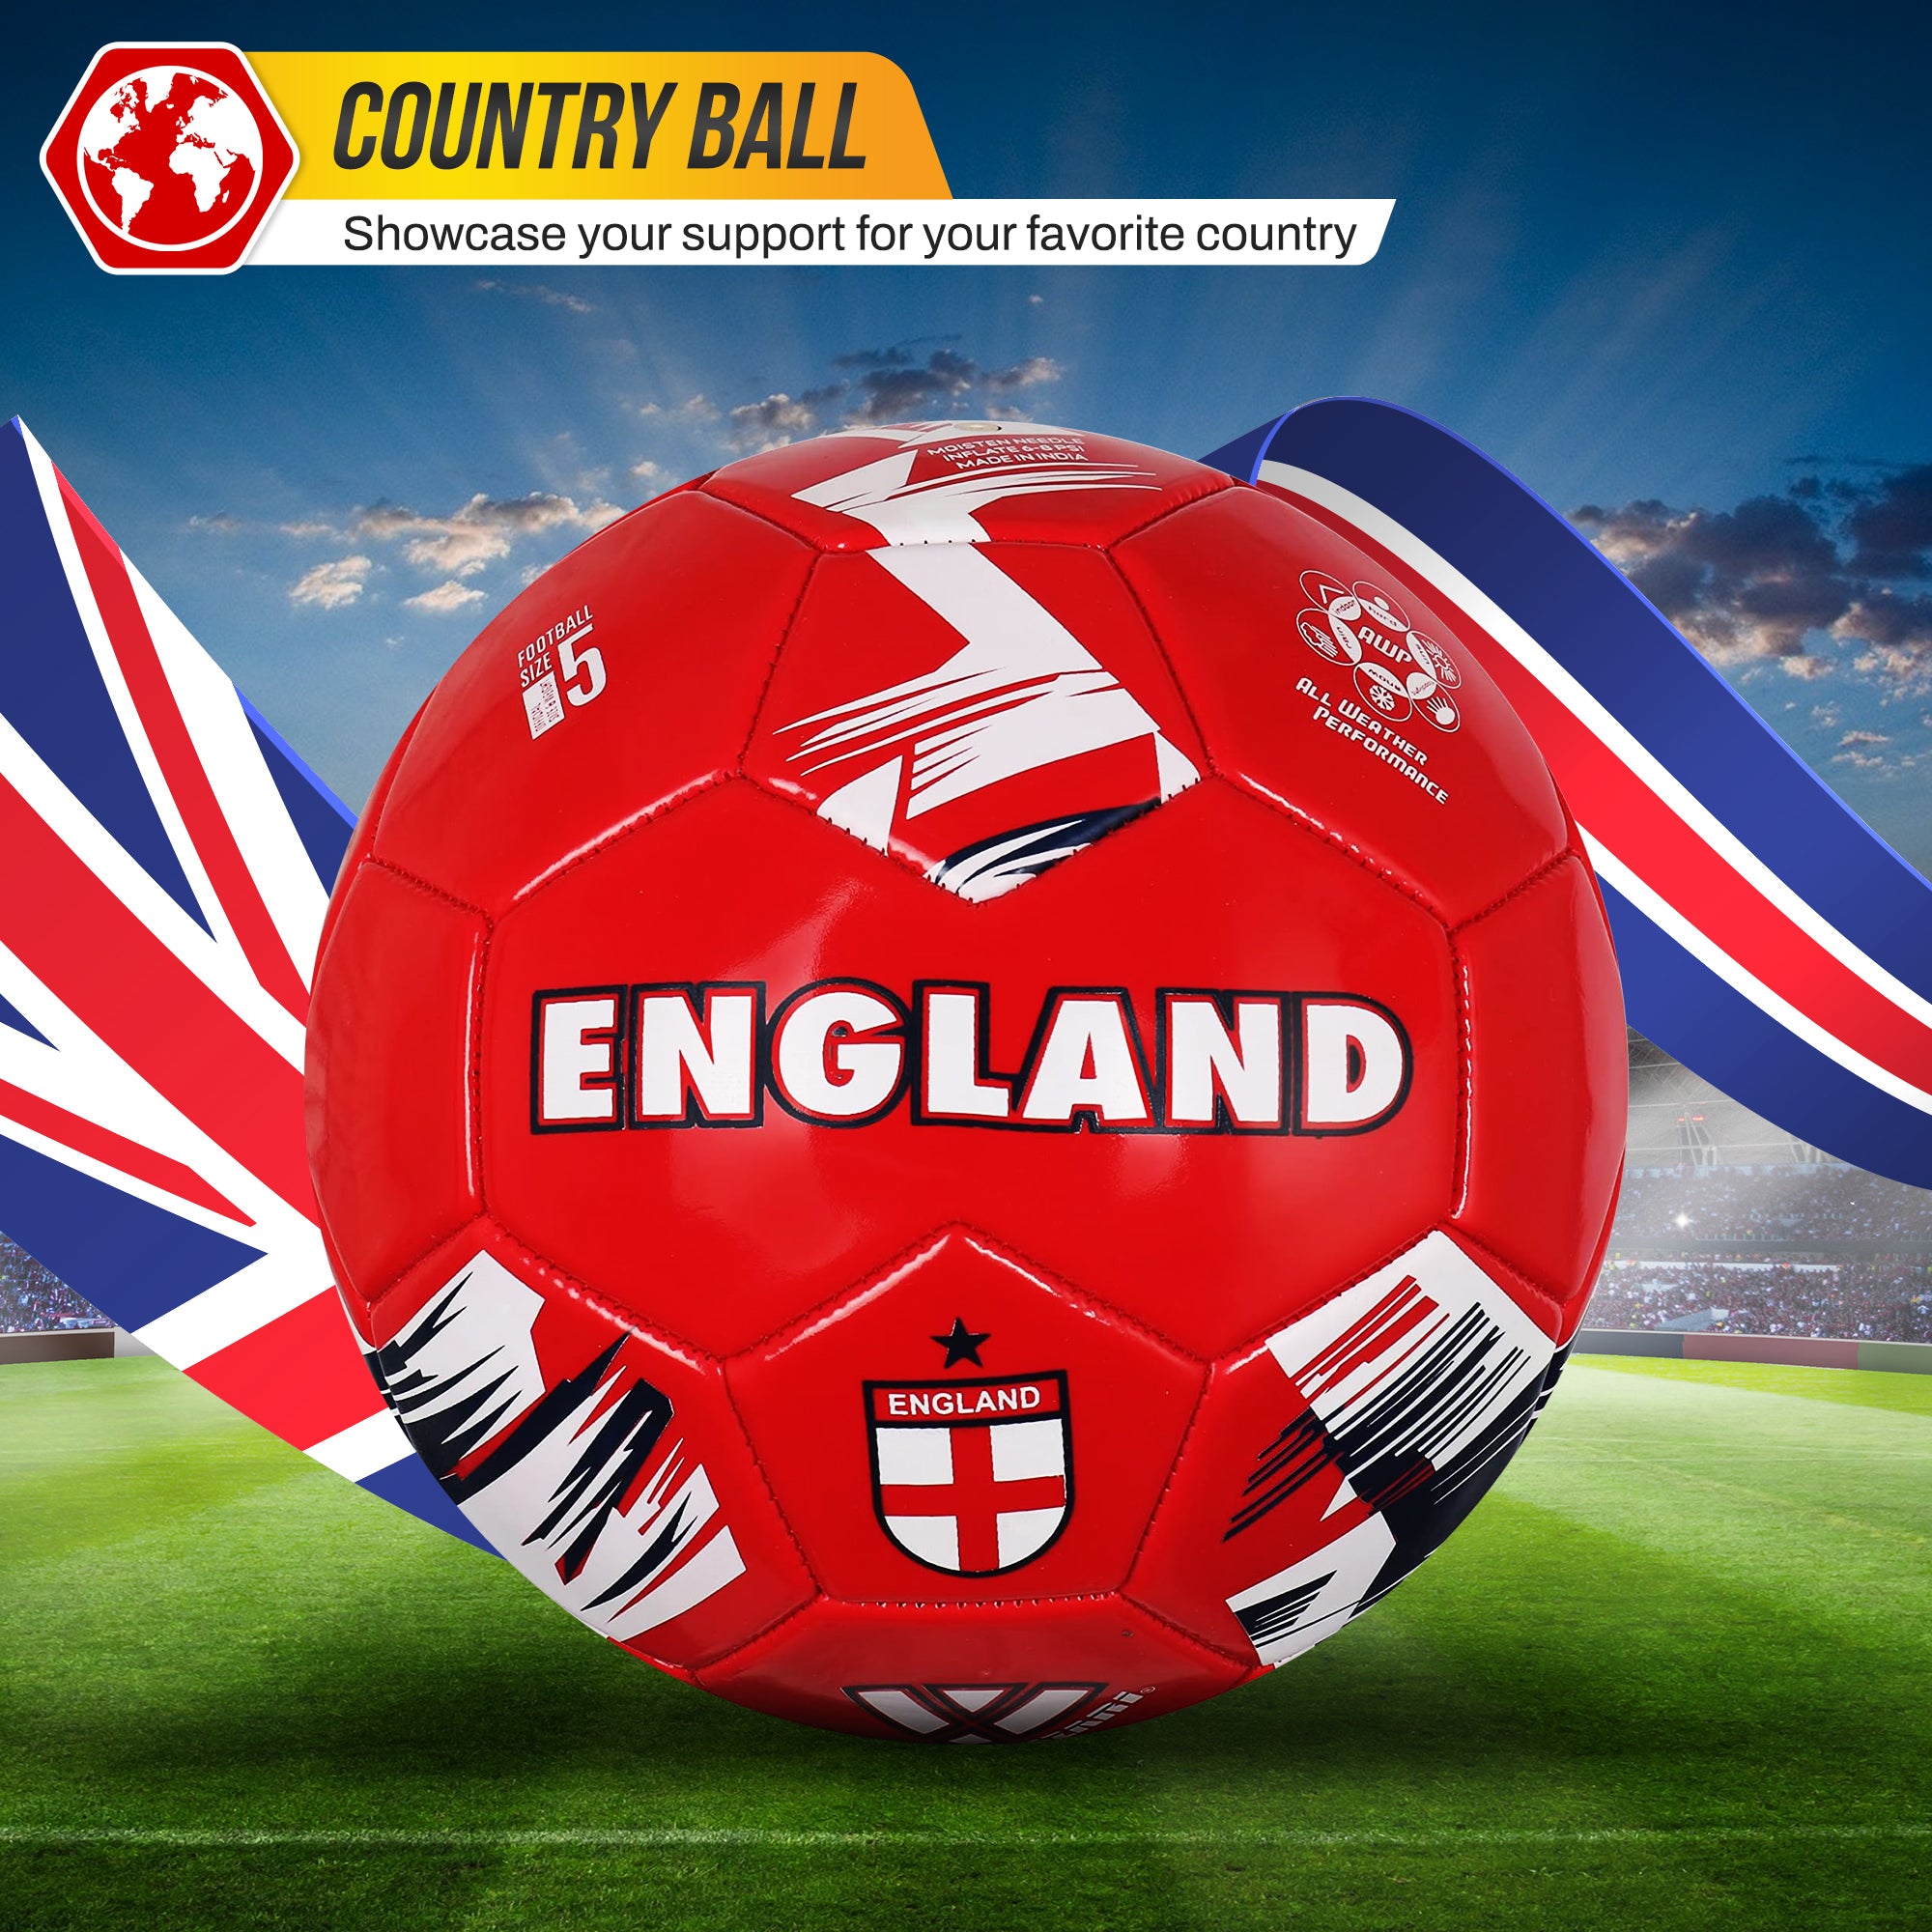 Mini National Team Soccer Balls-England Red